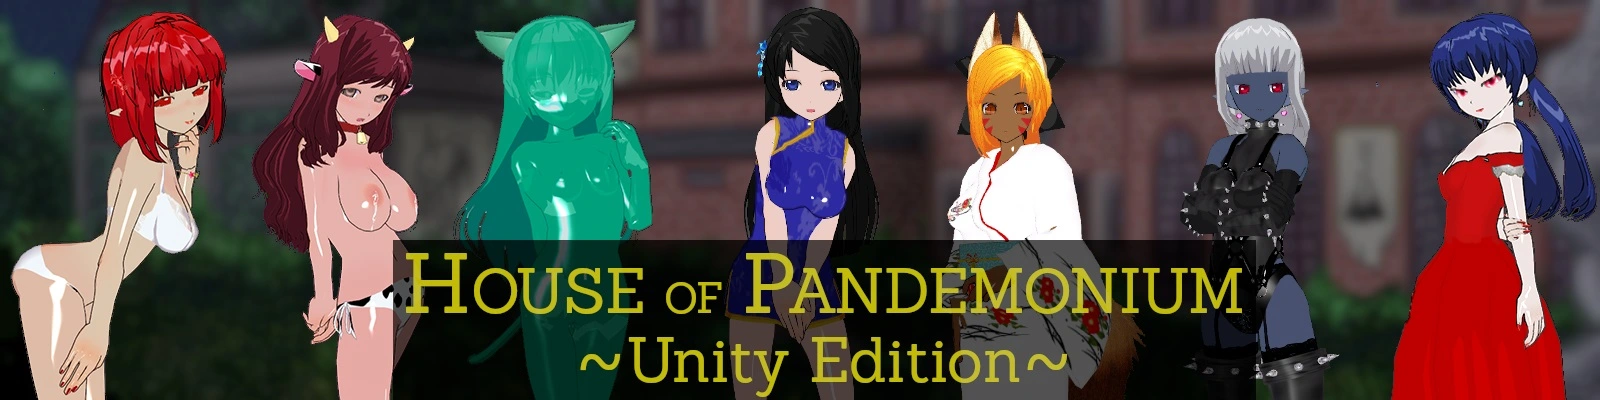 House of Pandemonium: Unity Edition main image